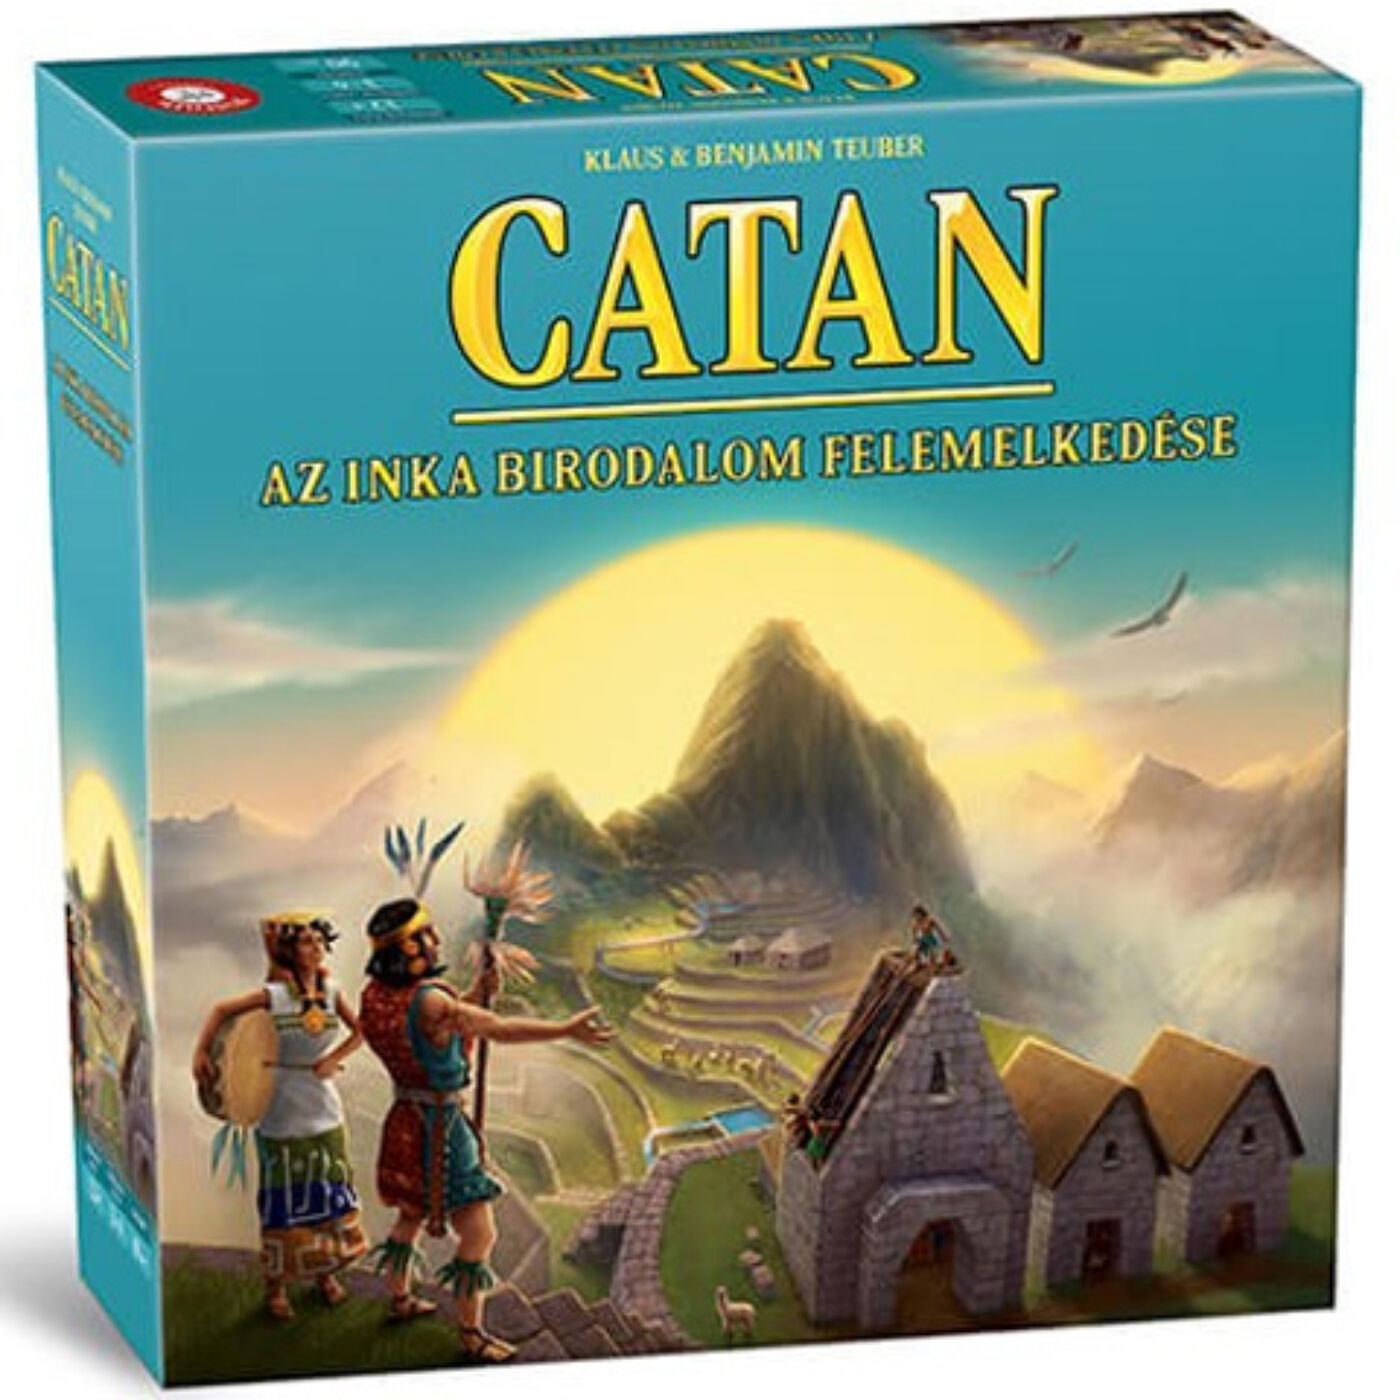 Catan - Az Inka birodalom felemelkedése